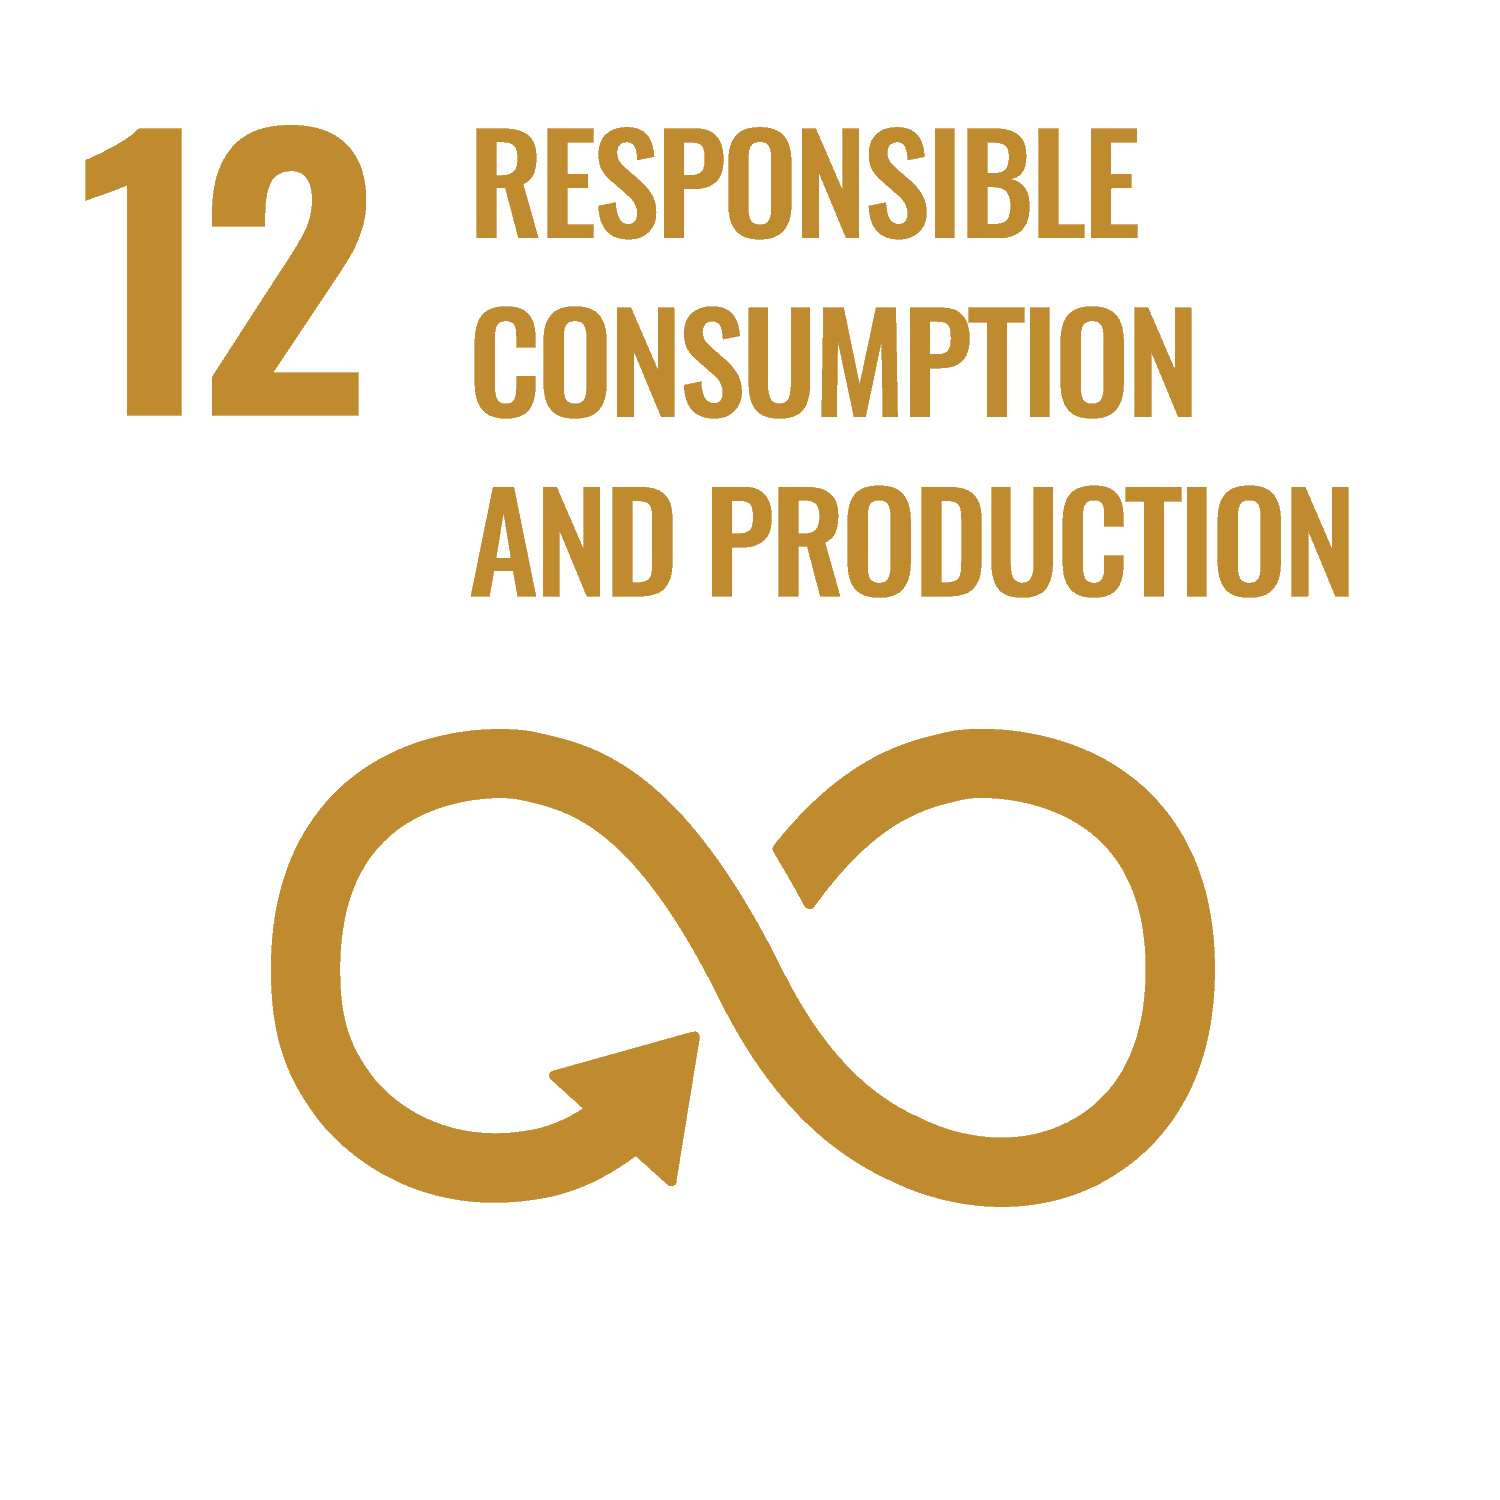 UN Sustainable Development Goal number 12